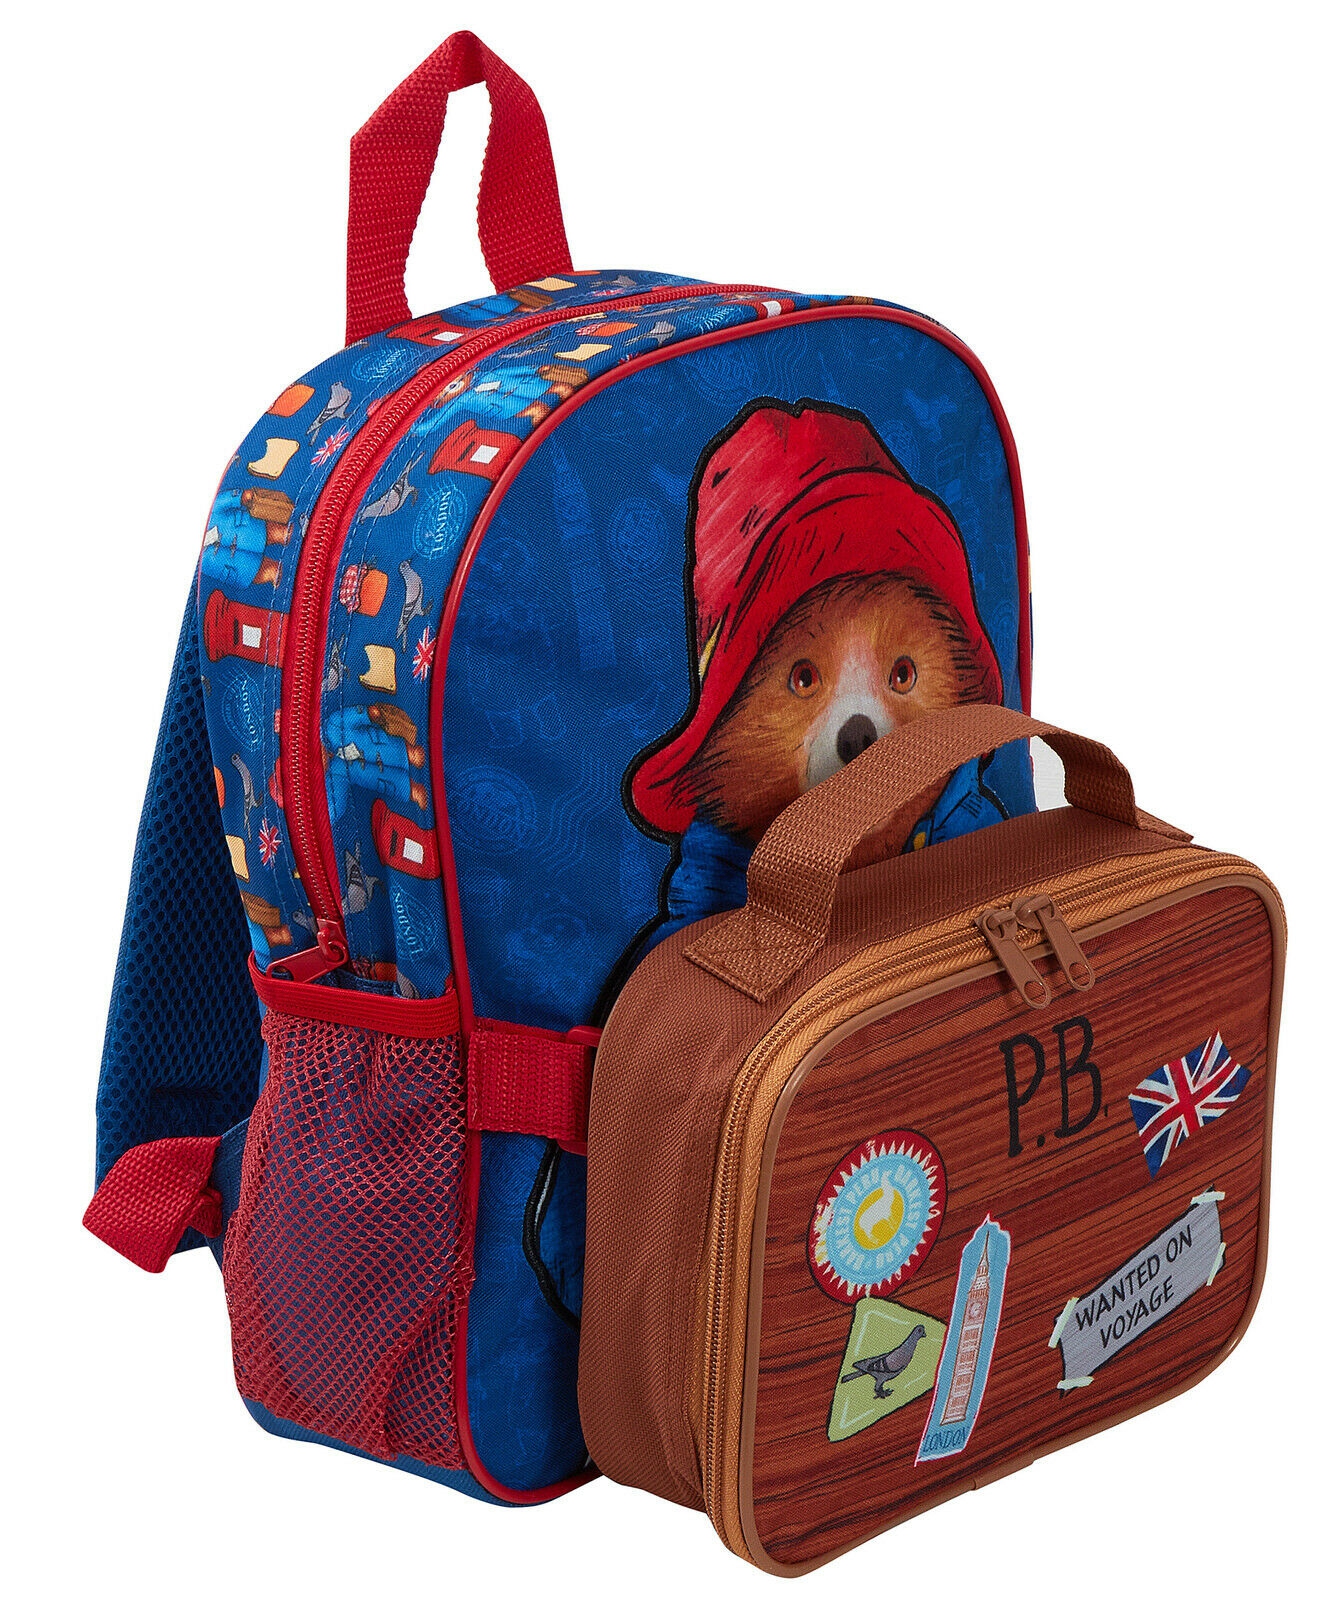 Paddington Bear Kids Bag with Detachable Lunch Bag/pencil Case School Rucksack Backpack